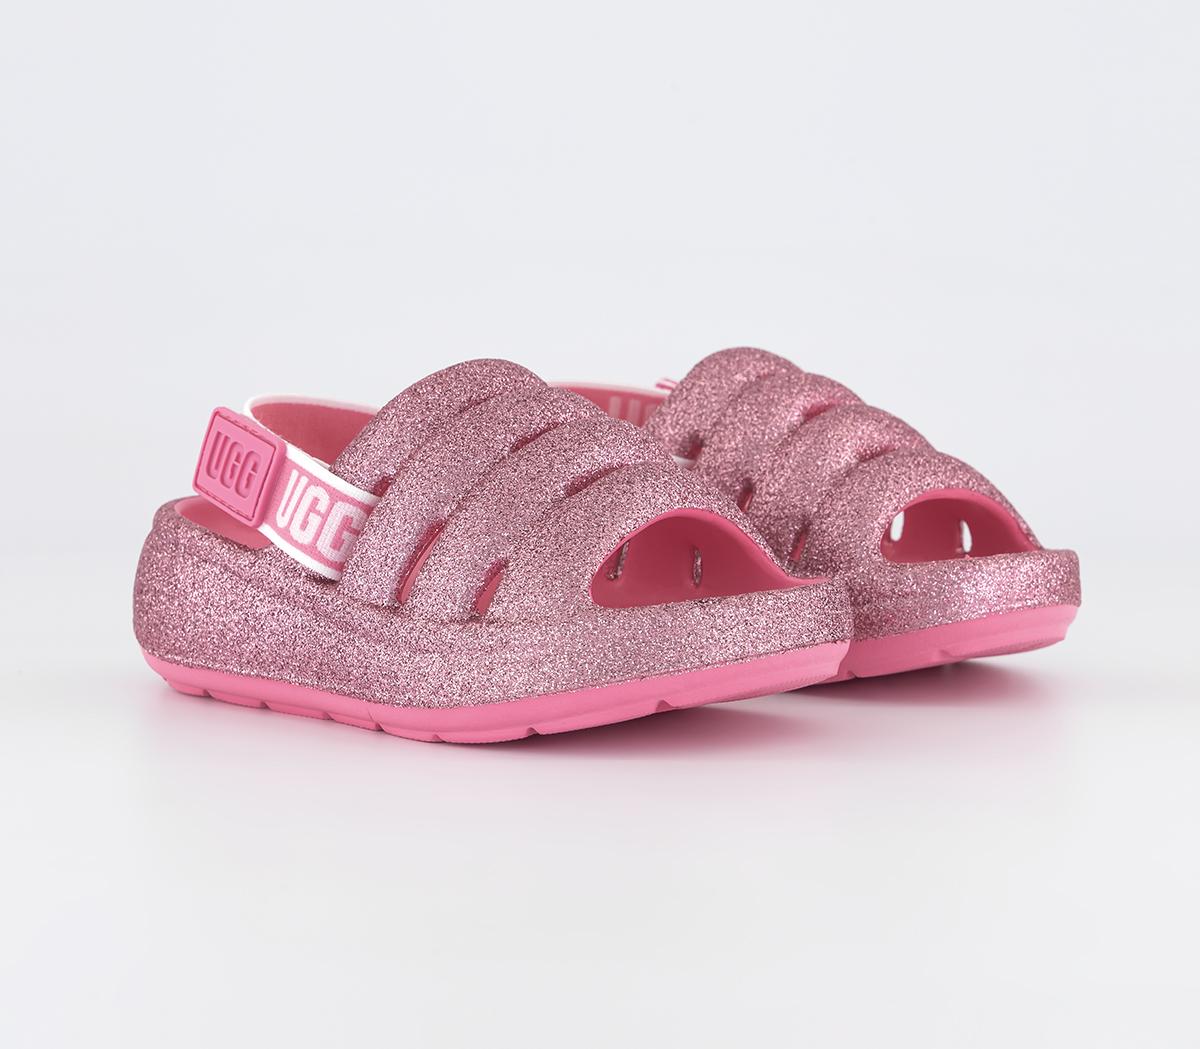 UGG Kids Sport Yeah Sandals Pink Glitter, 5infant